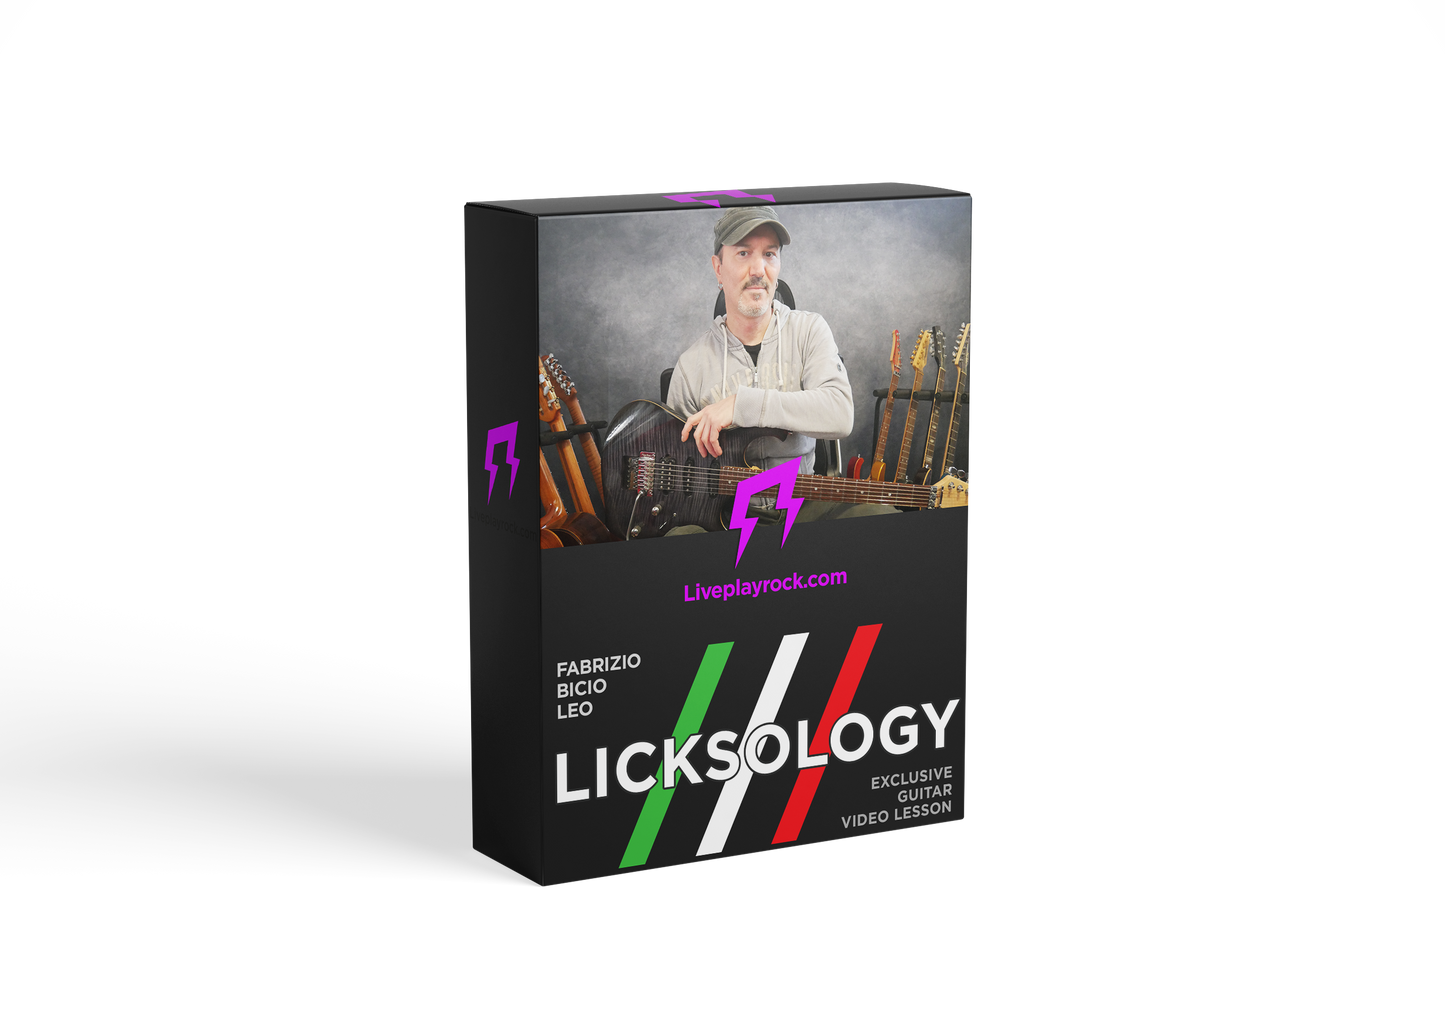 Licksology 3 Fabrizio Bicio Leo